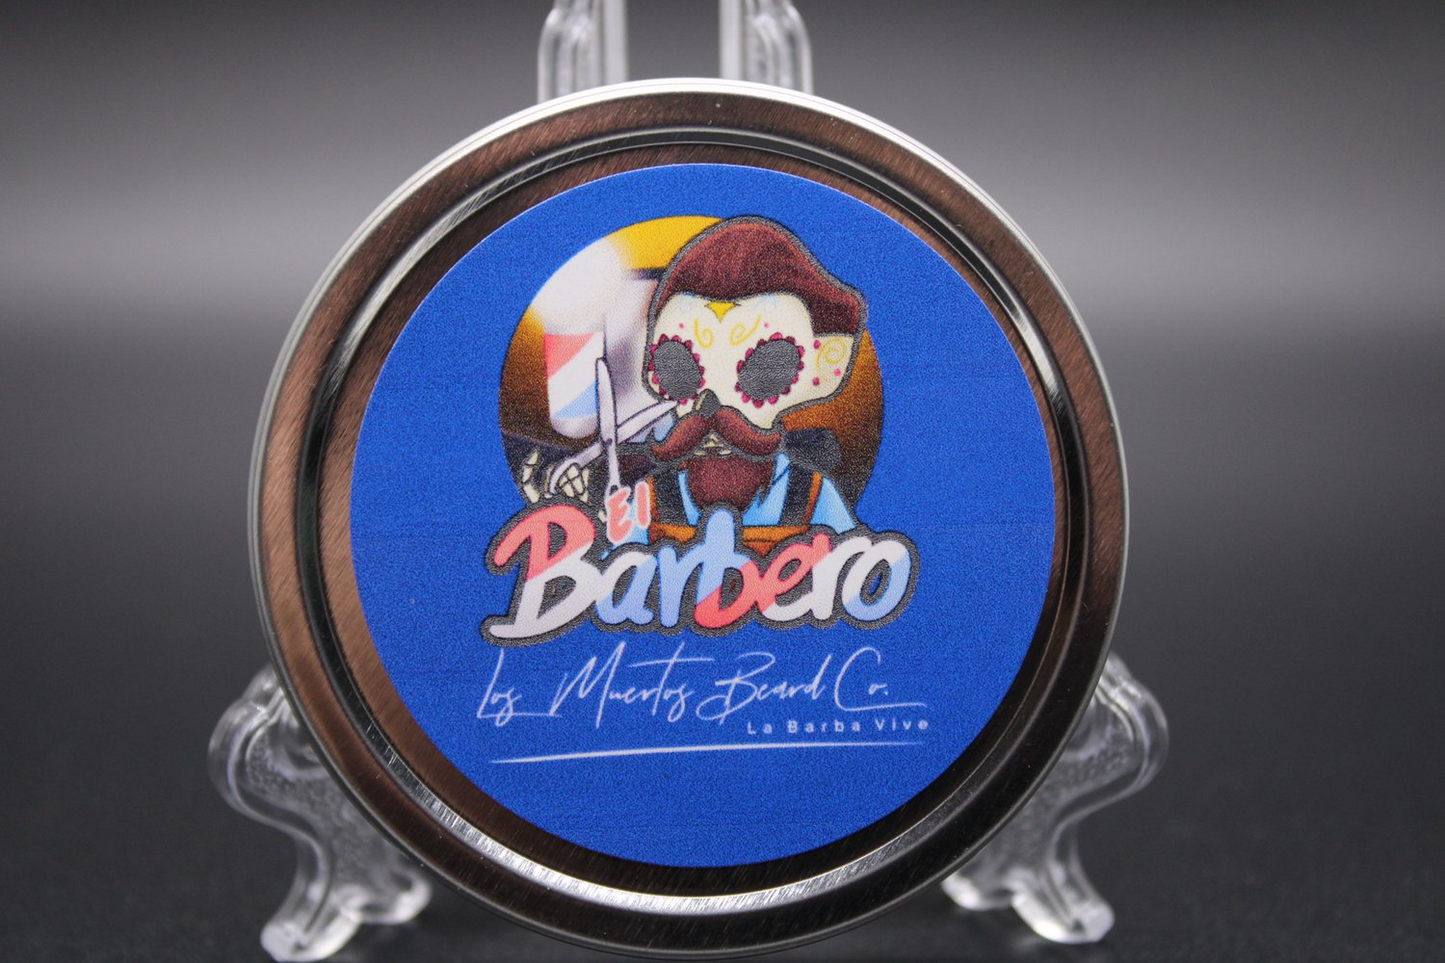 El Barbero Beard Balm - Los Muertos Beard Co